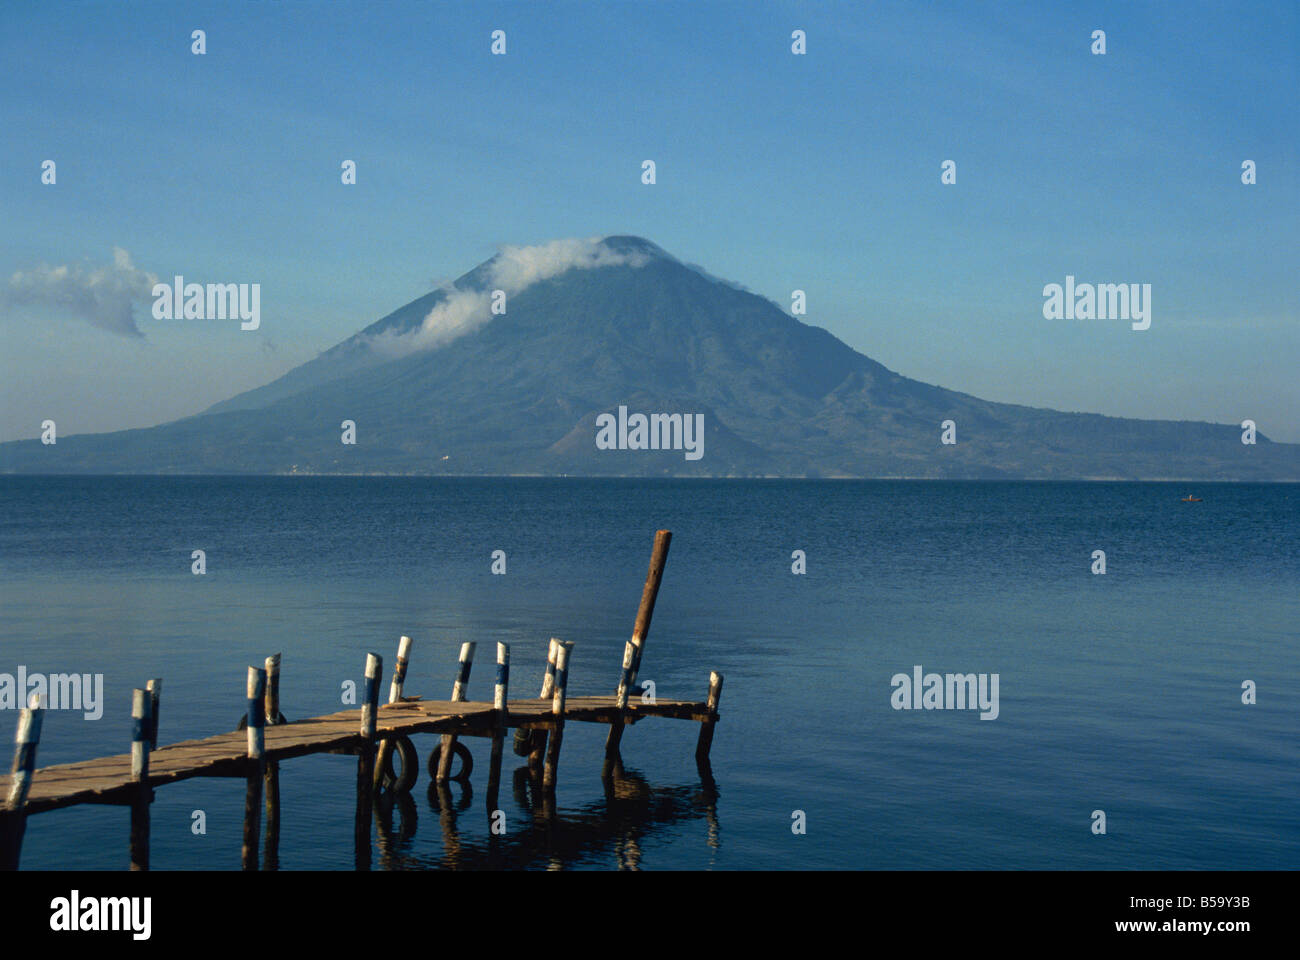 Volcano, Lake Atitlan, Atitlan, Guatemala, Central America Stock Photo